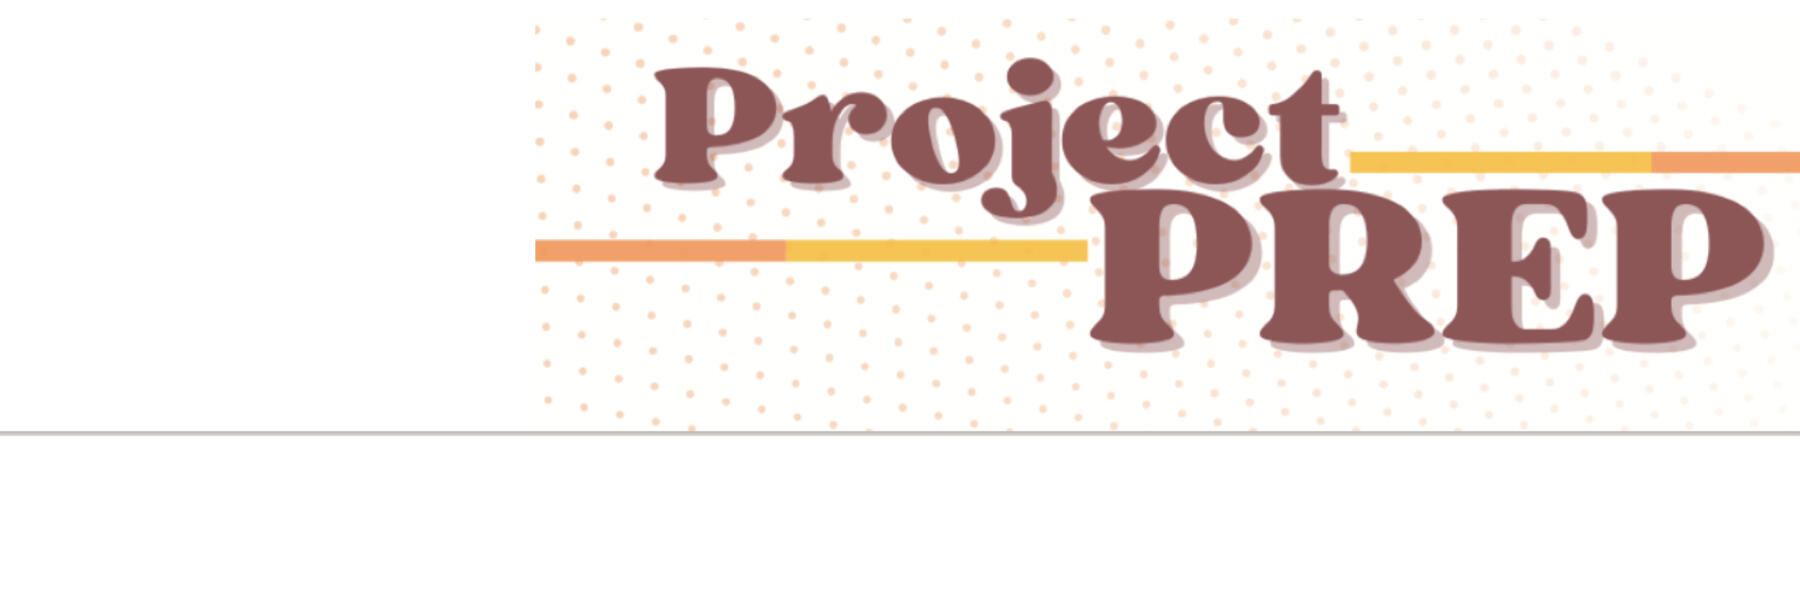 project prep graphic